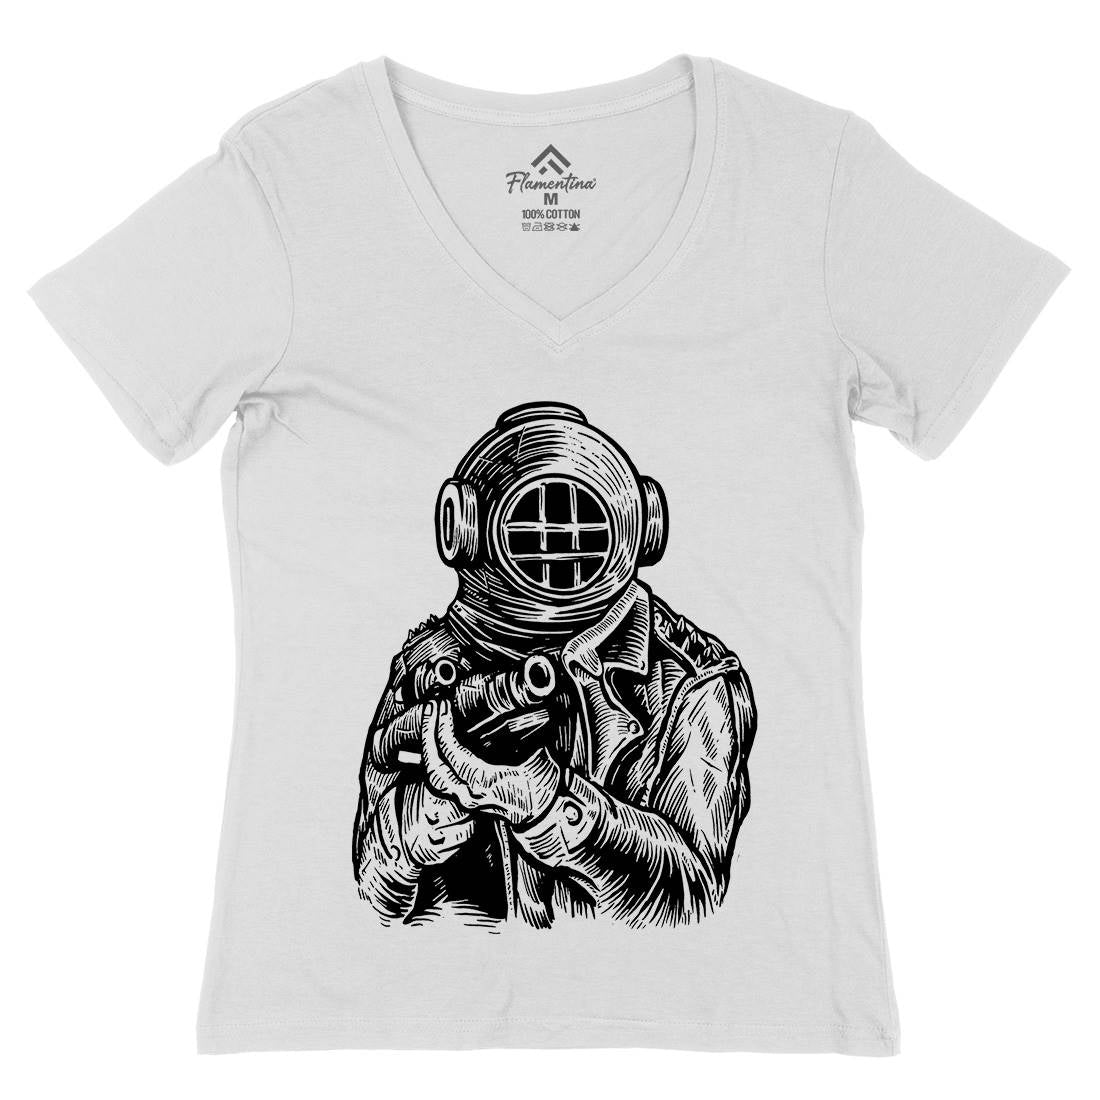 Diver Soldier Womens Organic V-Neck T-Shirt Navy A526